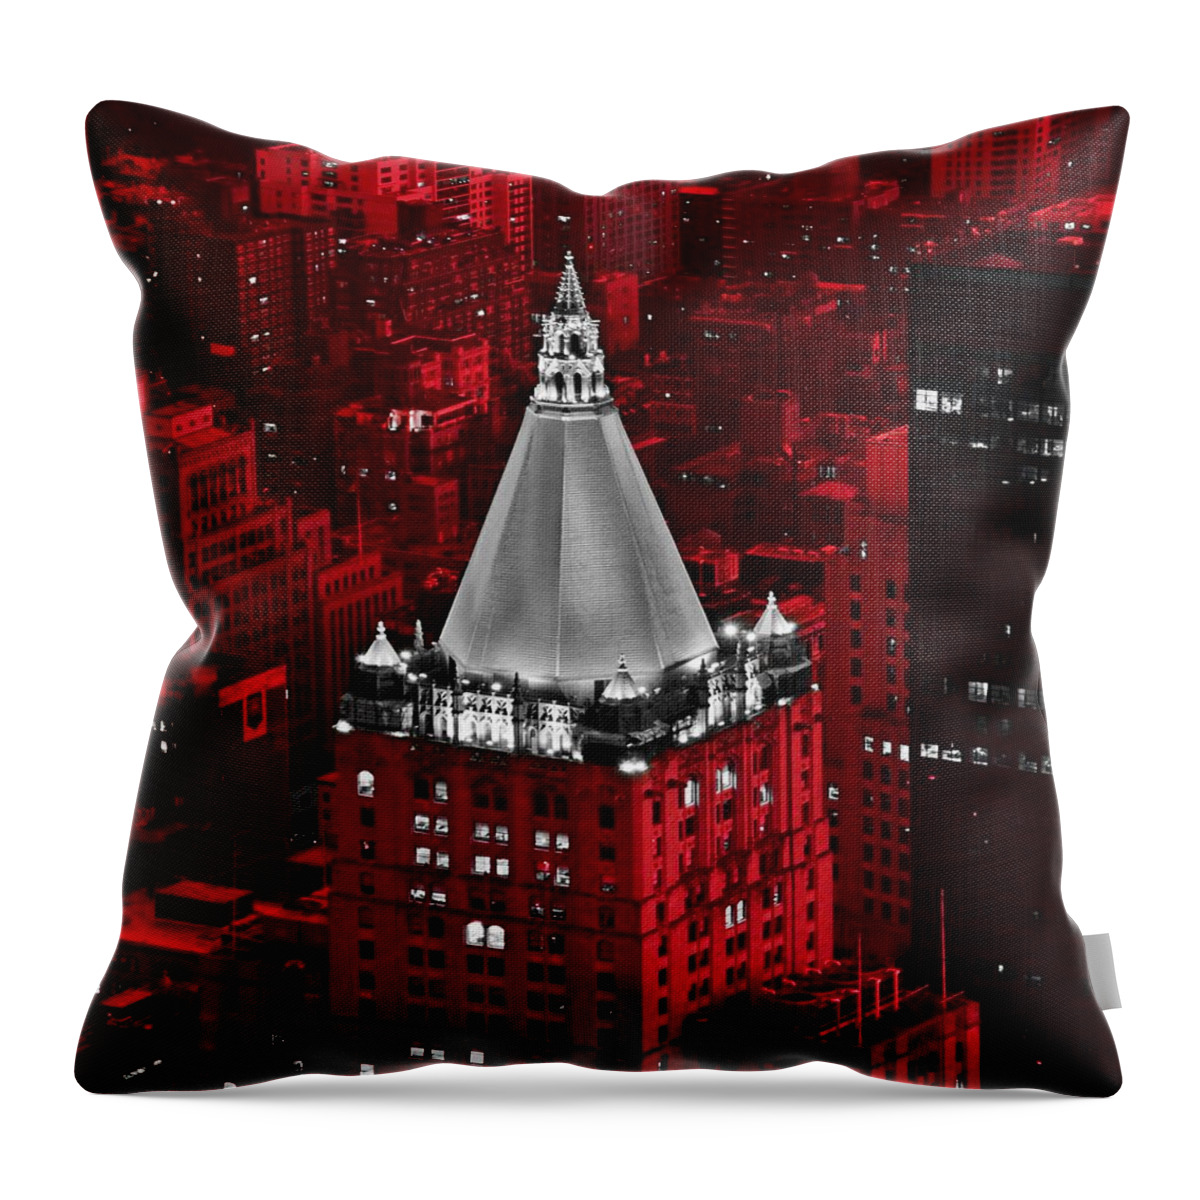 New York Life Building Throw Pillow featuring the photograph New York Life Building #1 by Marianna Mills